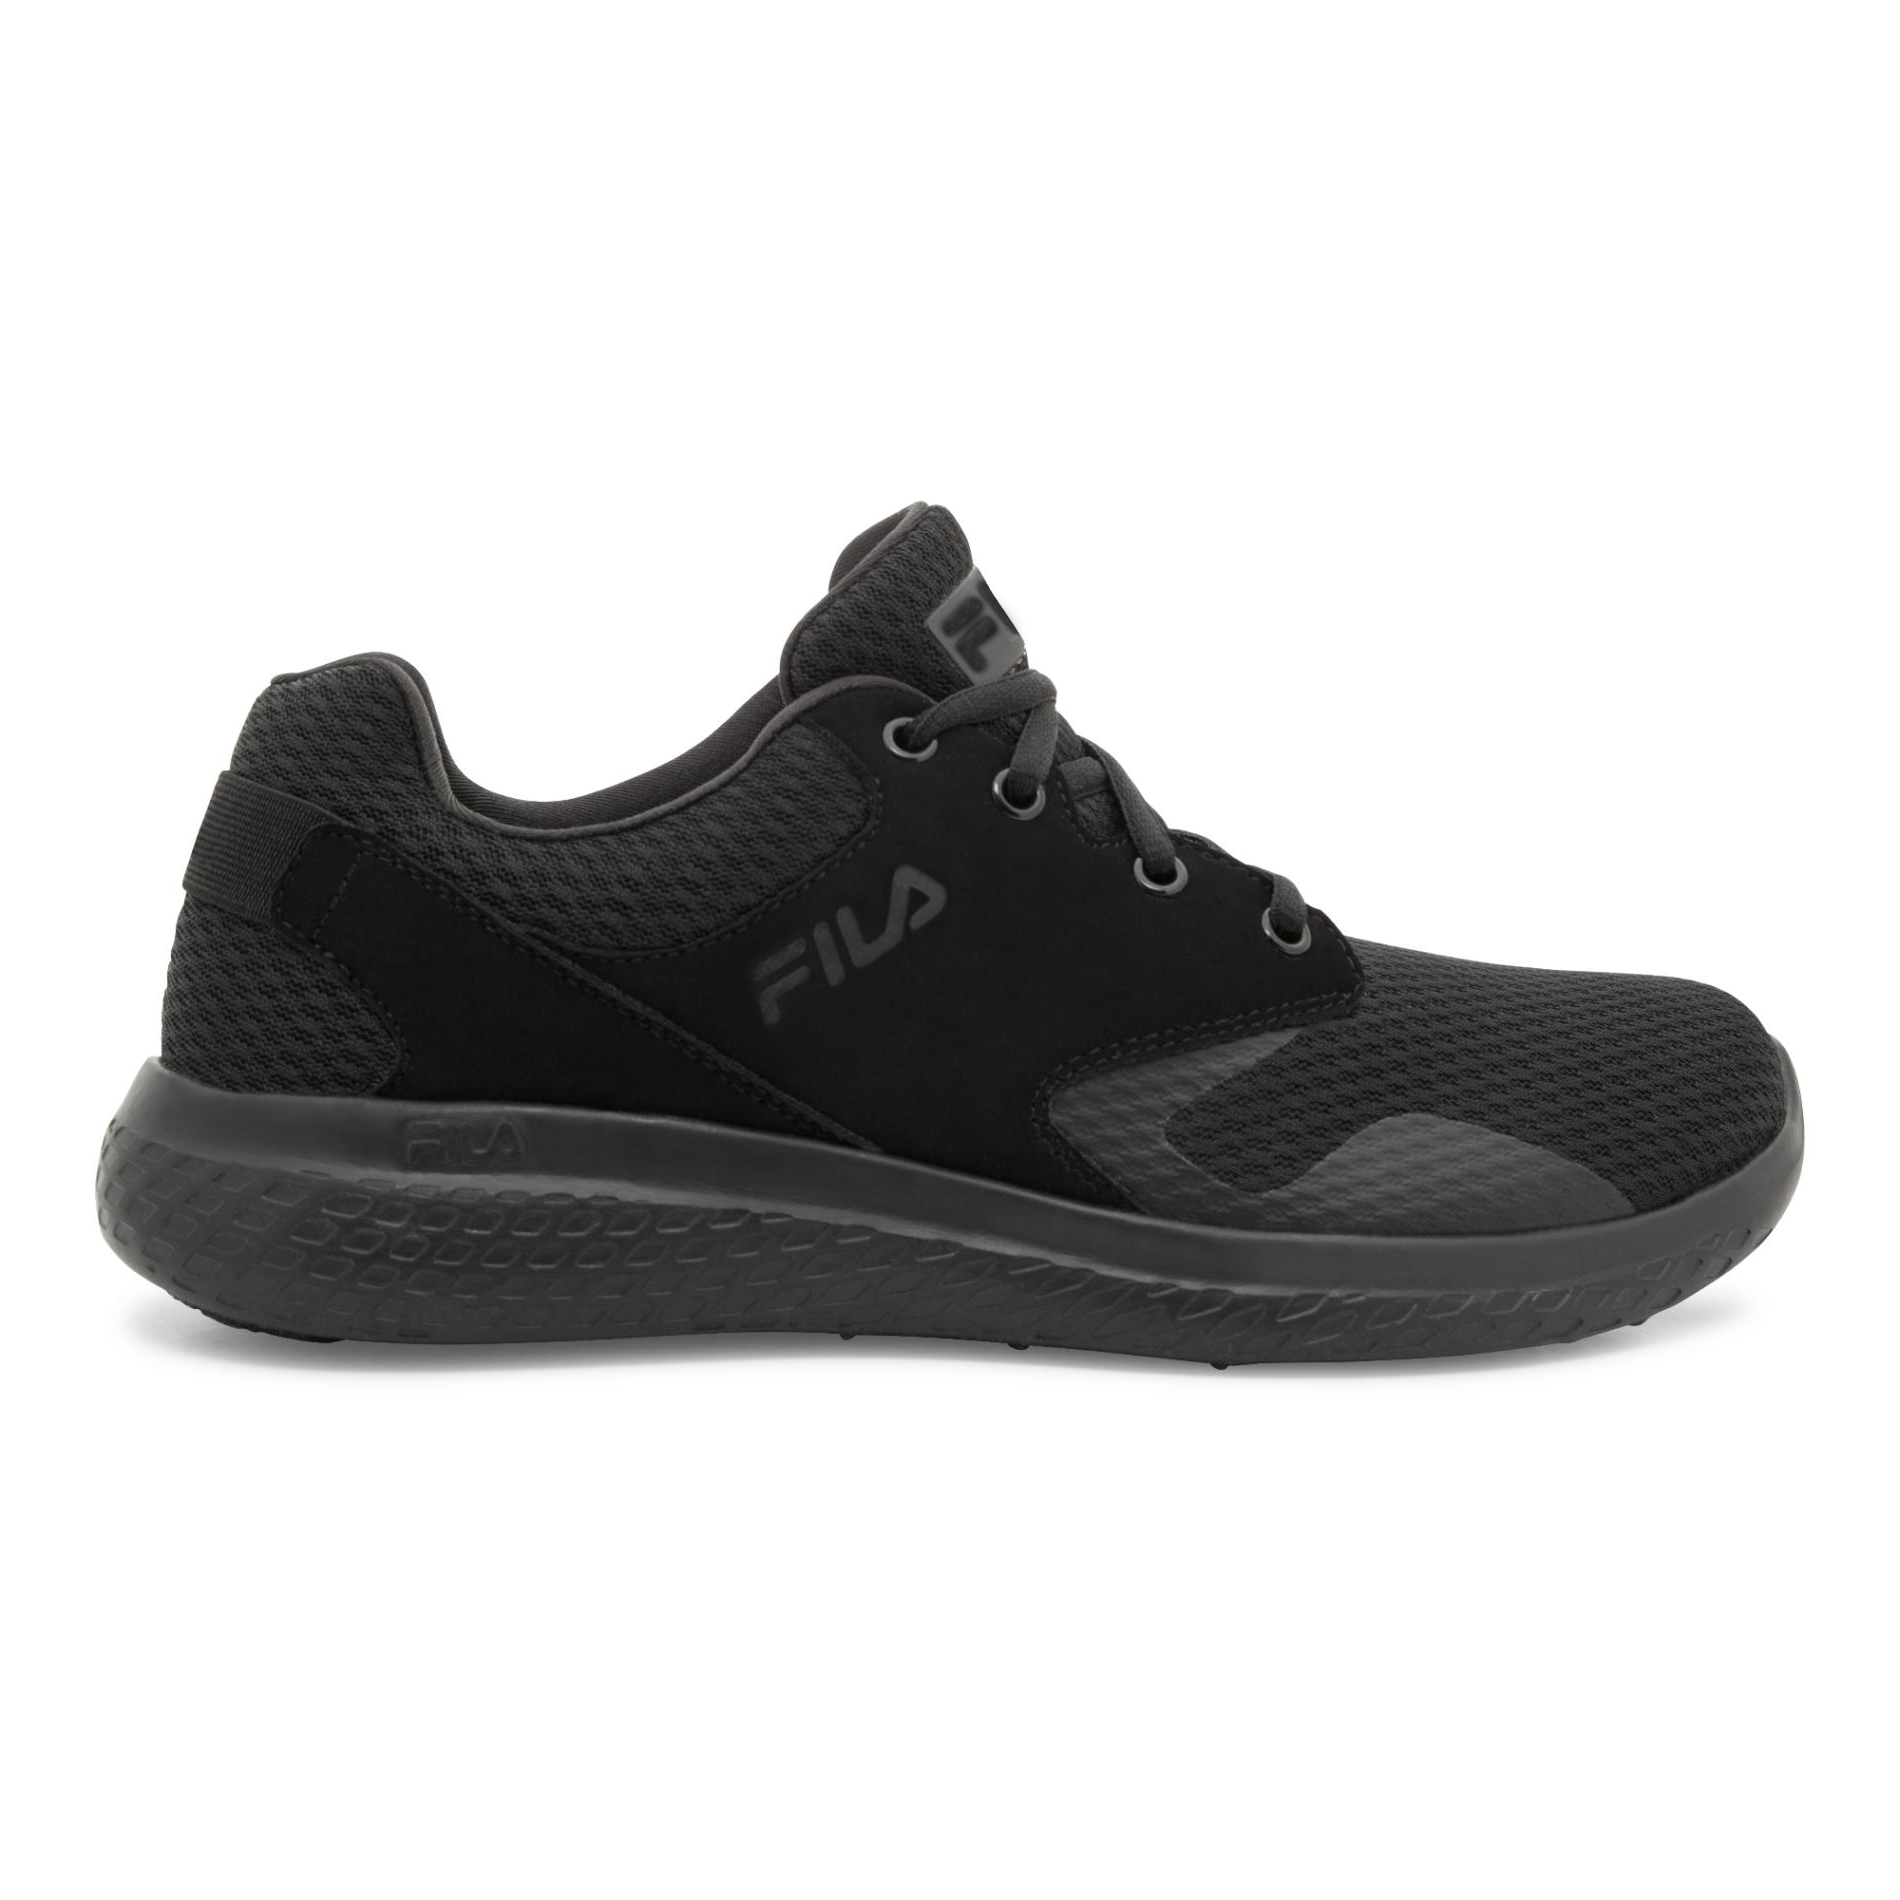 Fila Men's Layers Running Shoe - Black